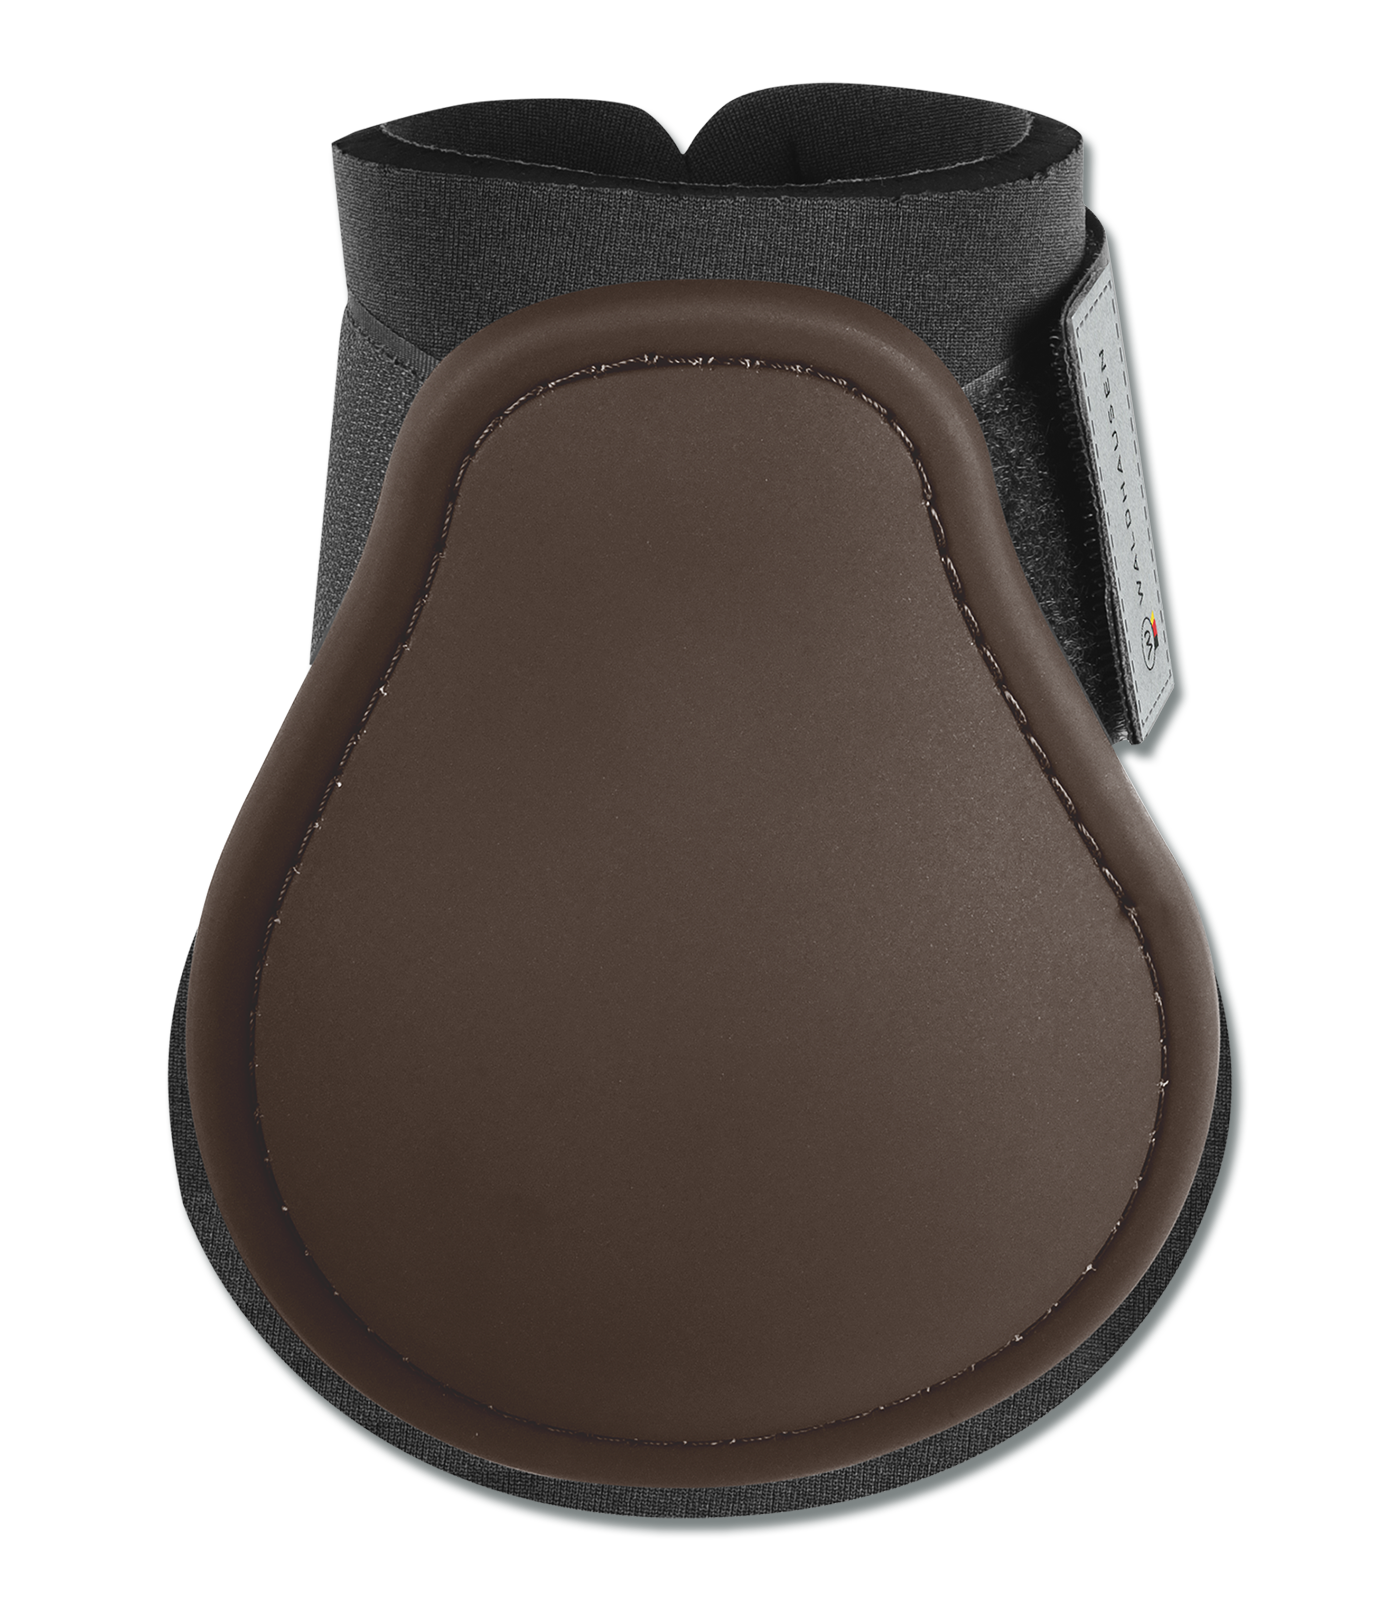 Basic Hind Boots, pair dark brown